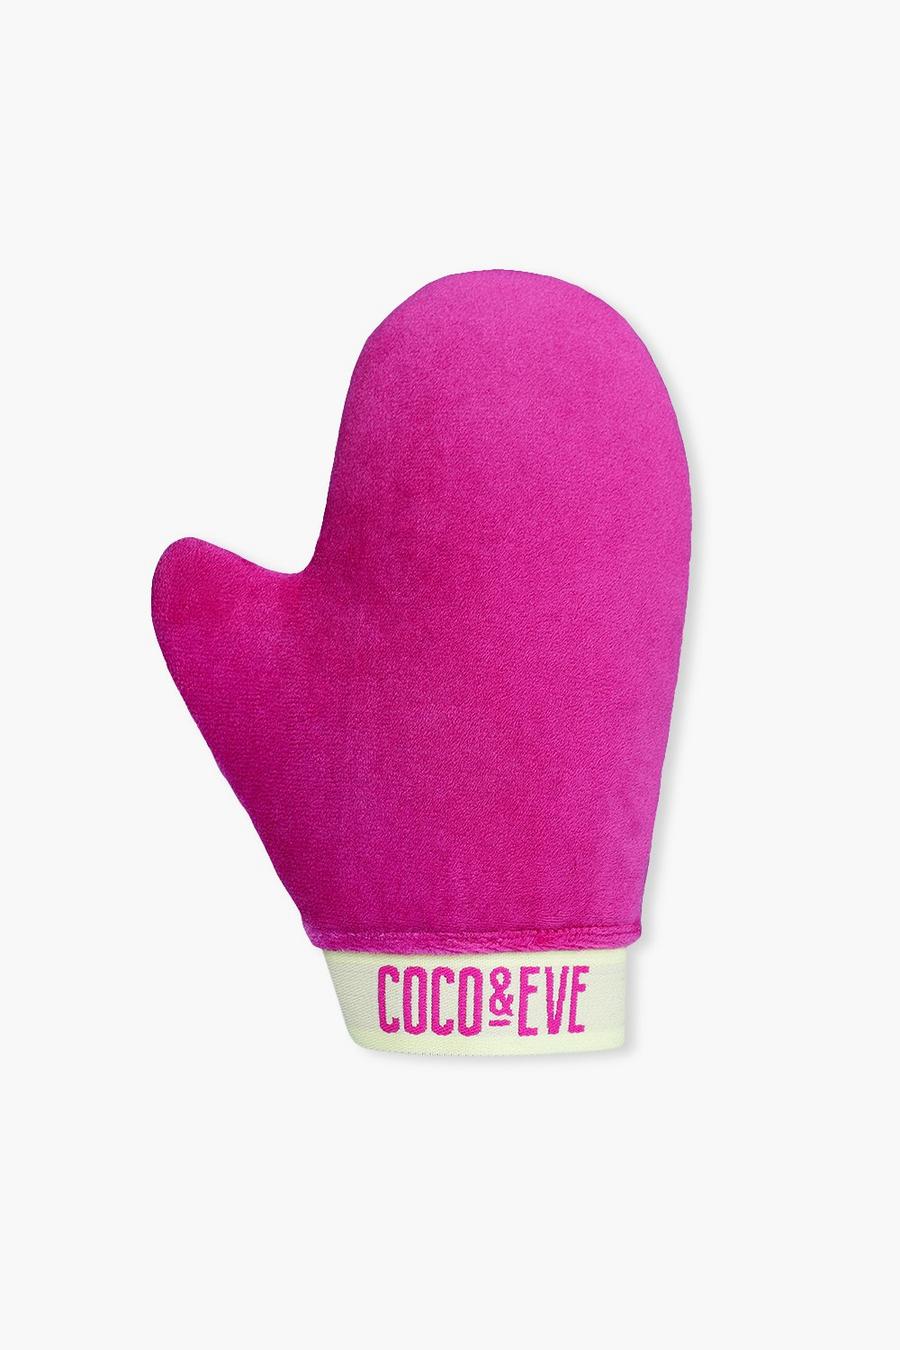 Coco & Eve - Gant applicateur d'autobronzant Sunny Honey, Pink image number 1